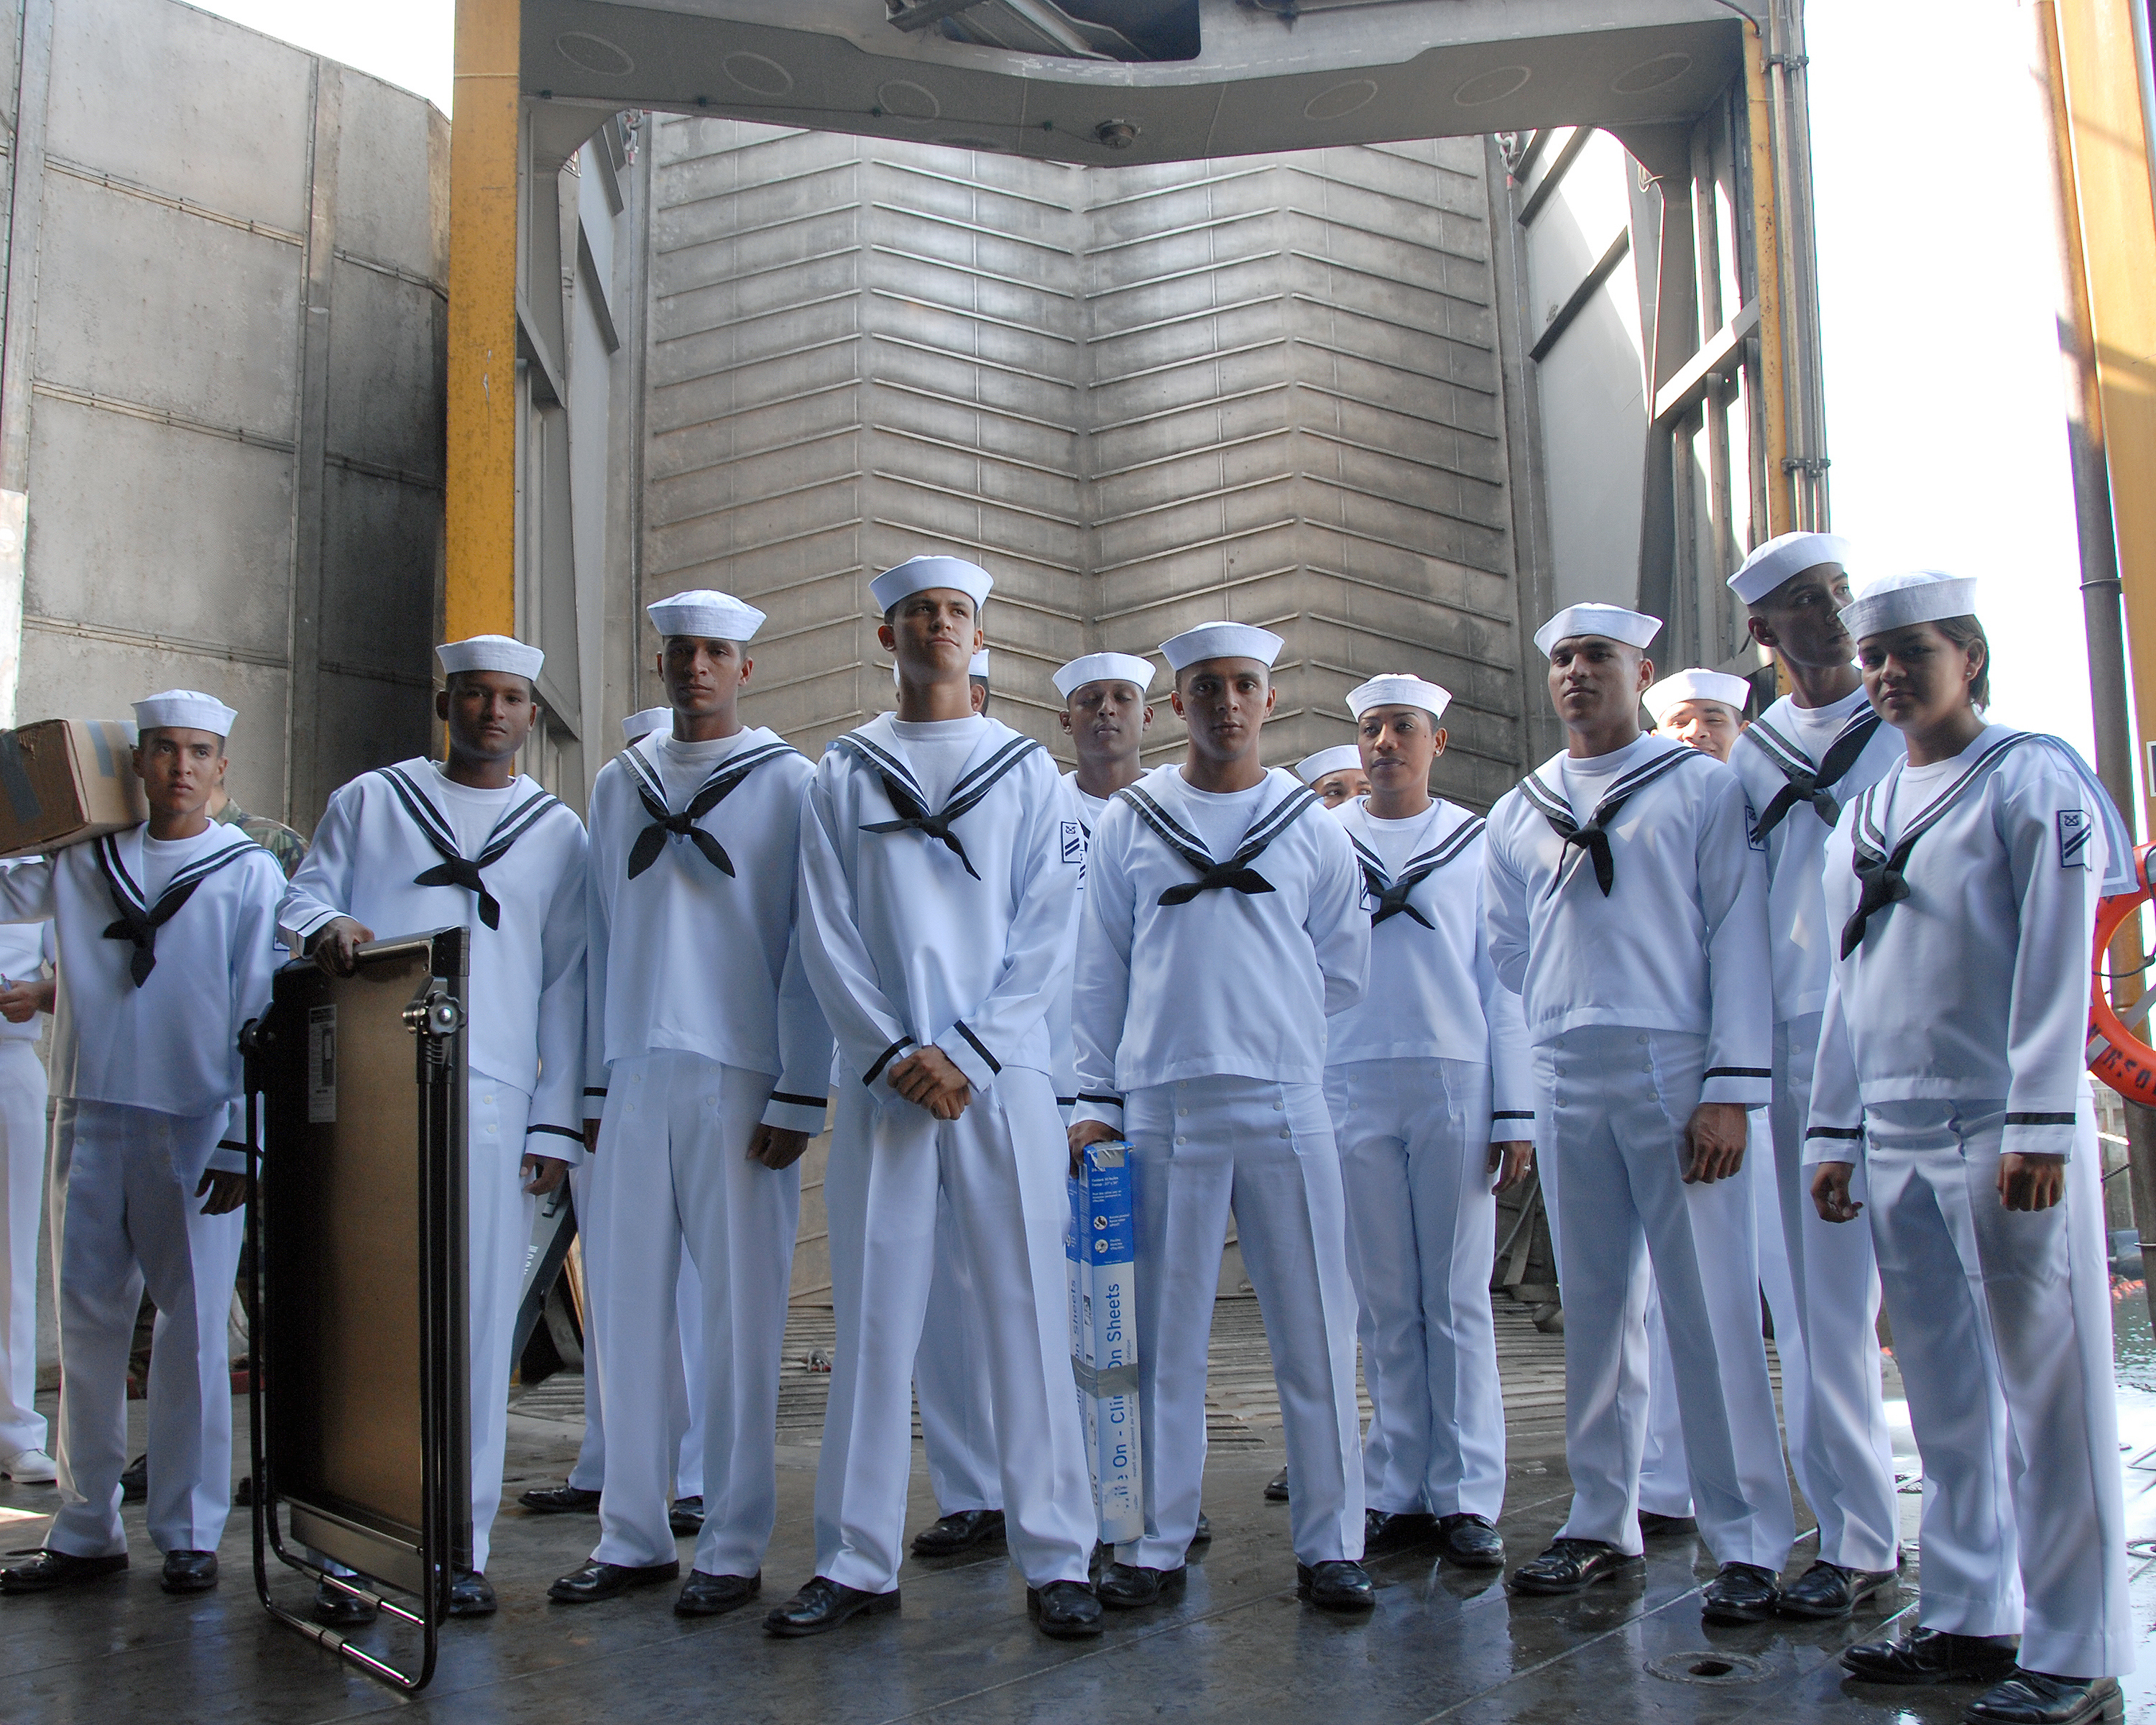 Group of sailors photo